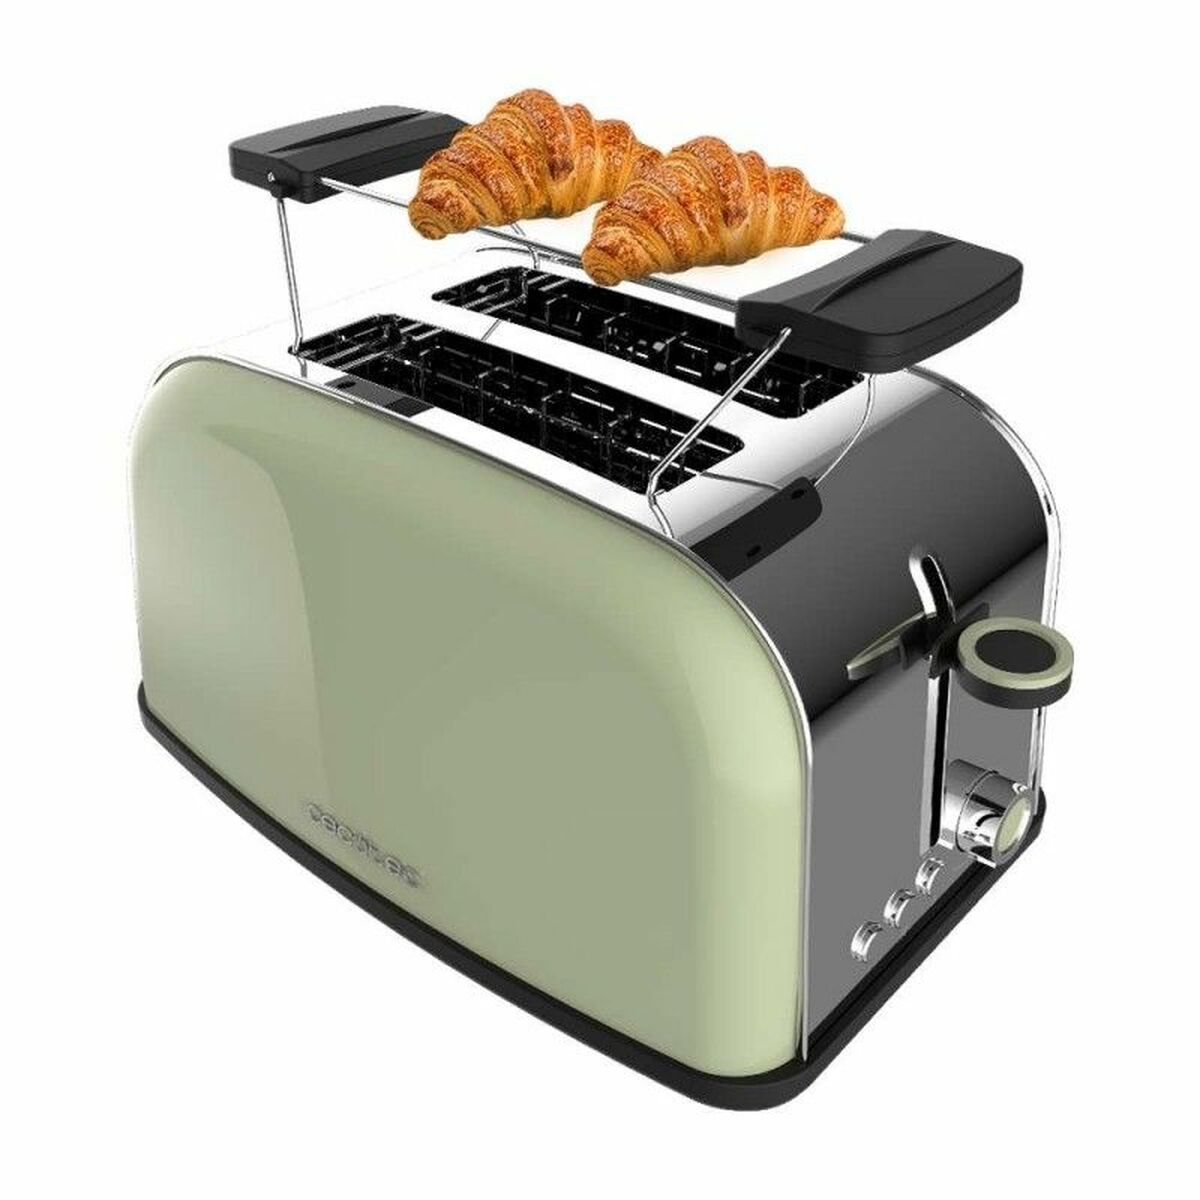 Toaster Cecotec Toastin' time 850 Green 850 W - CA International  